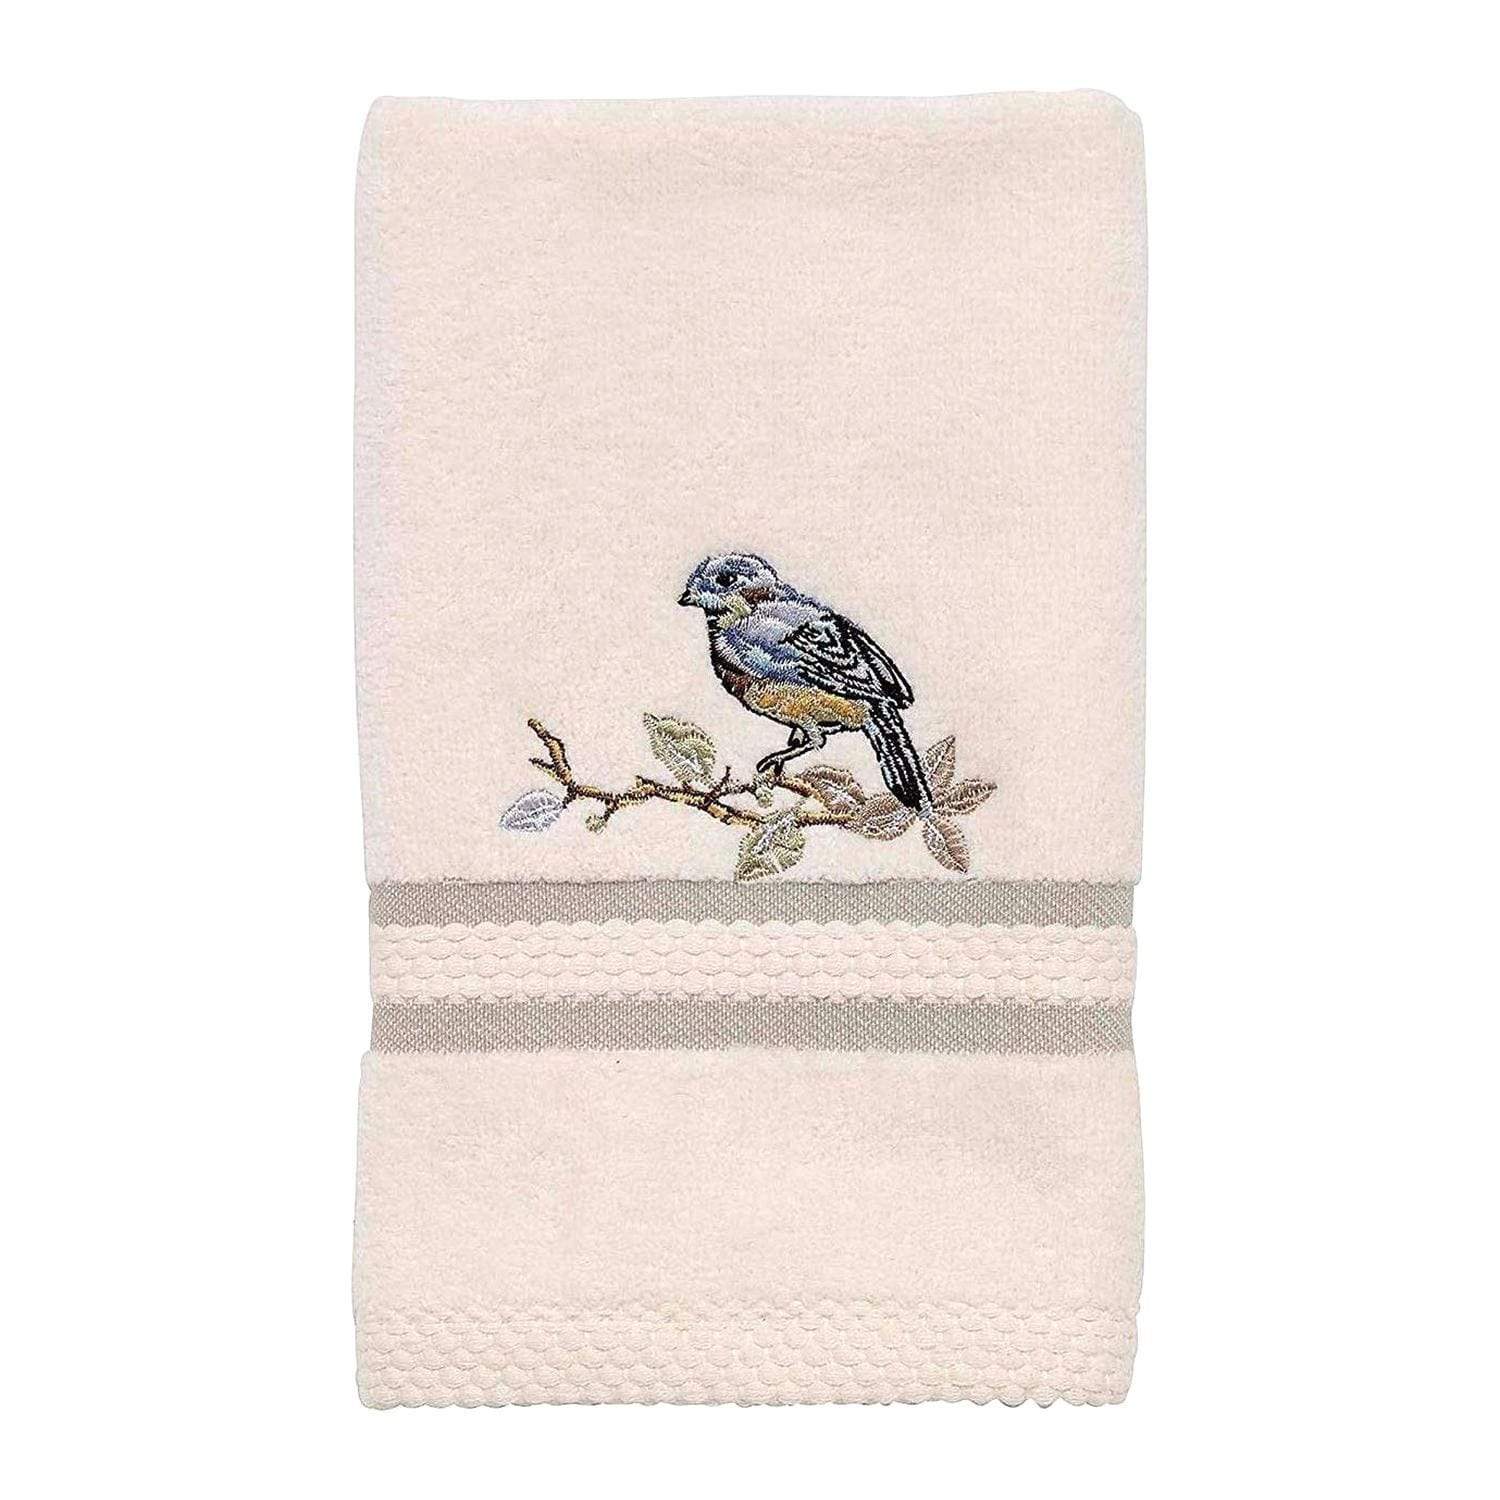 Avanti Love Nest Hand Towel - Multicolour - 036902MUL - Jashanmal Home